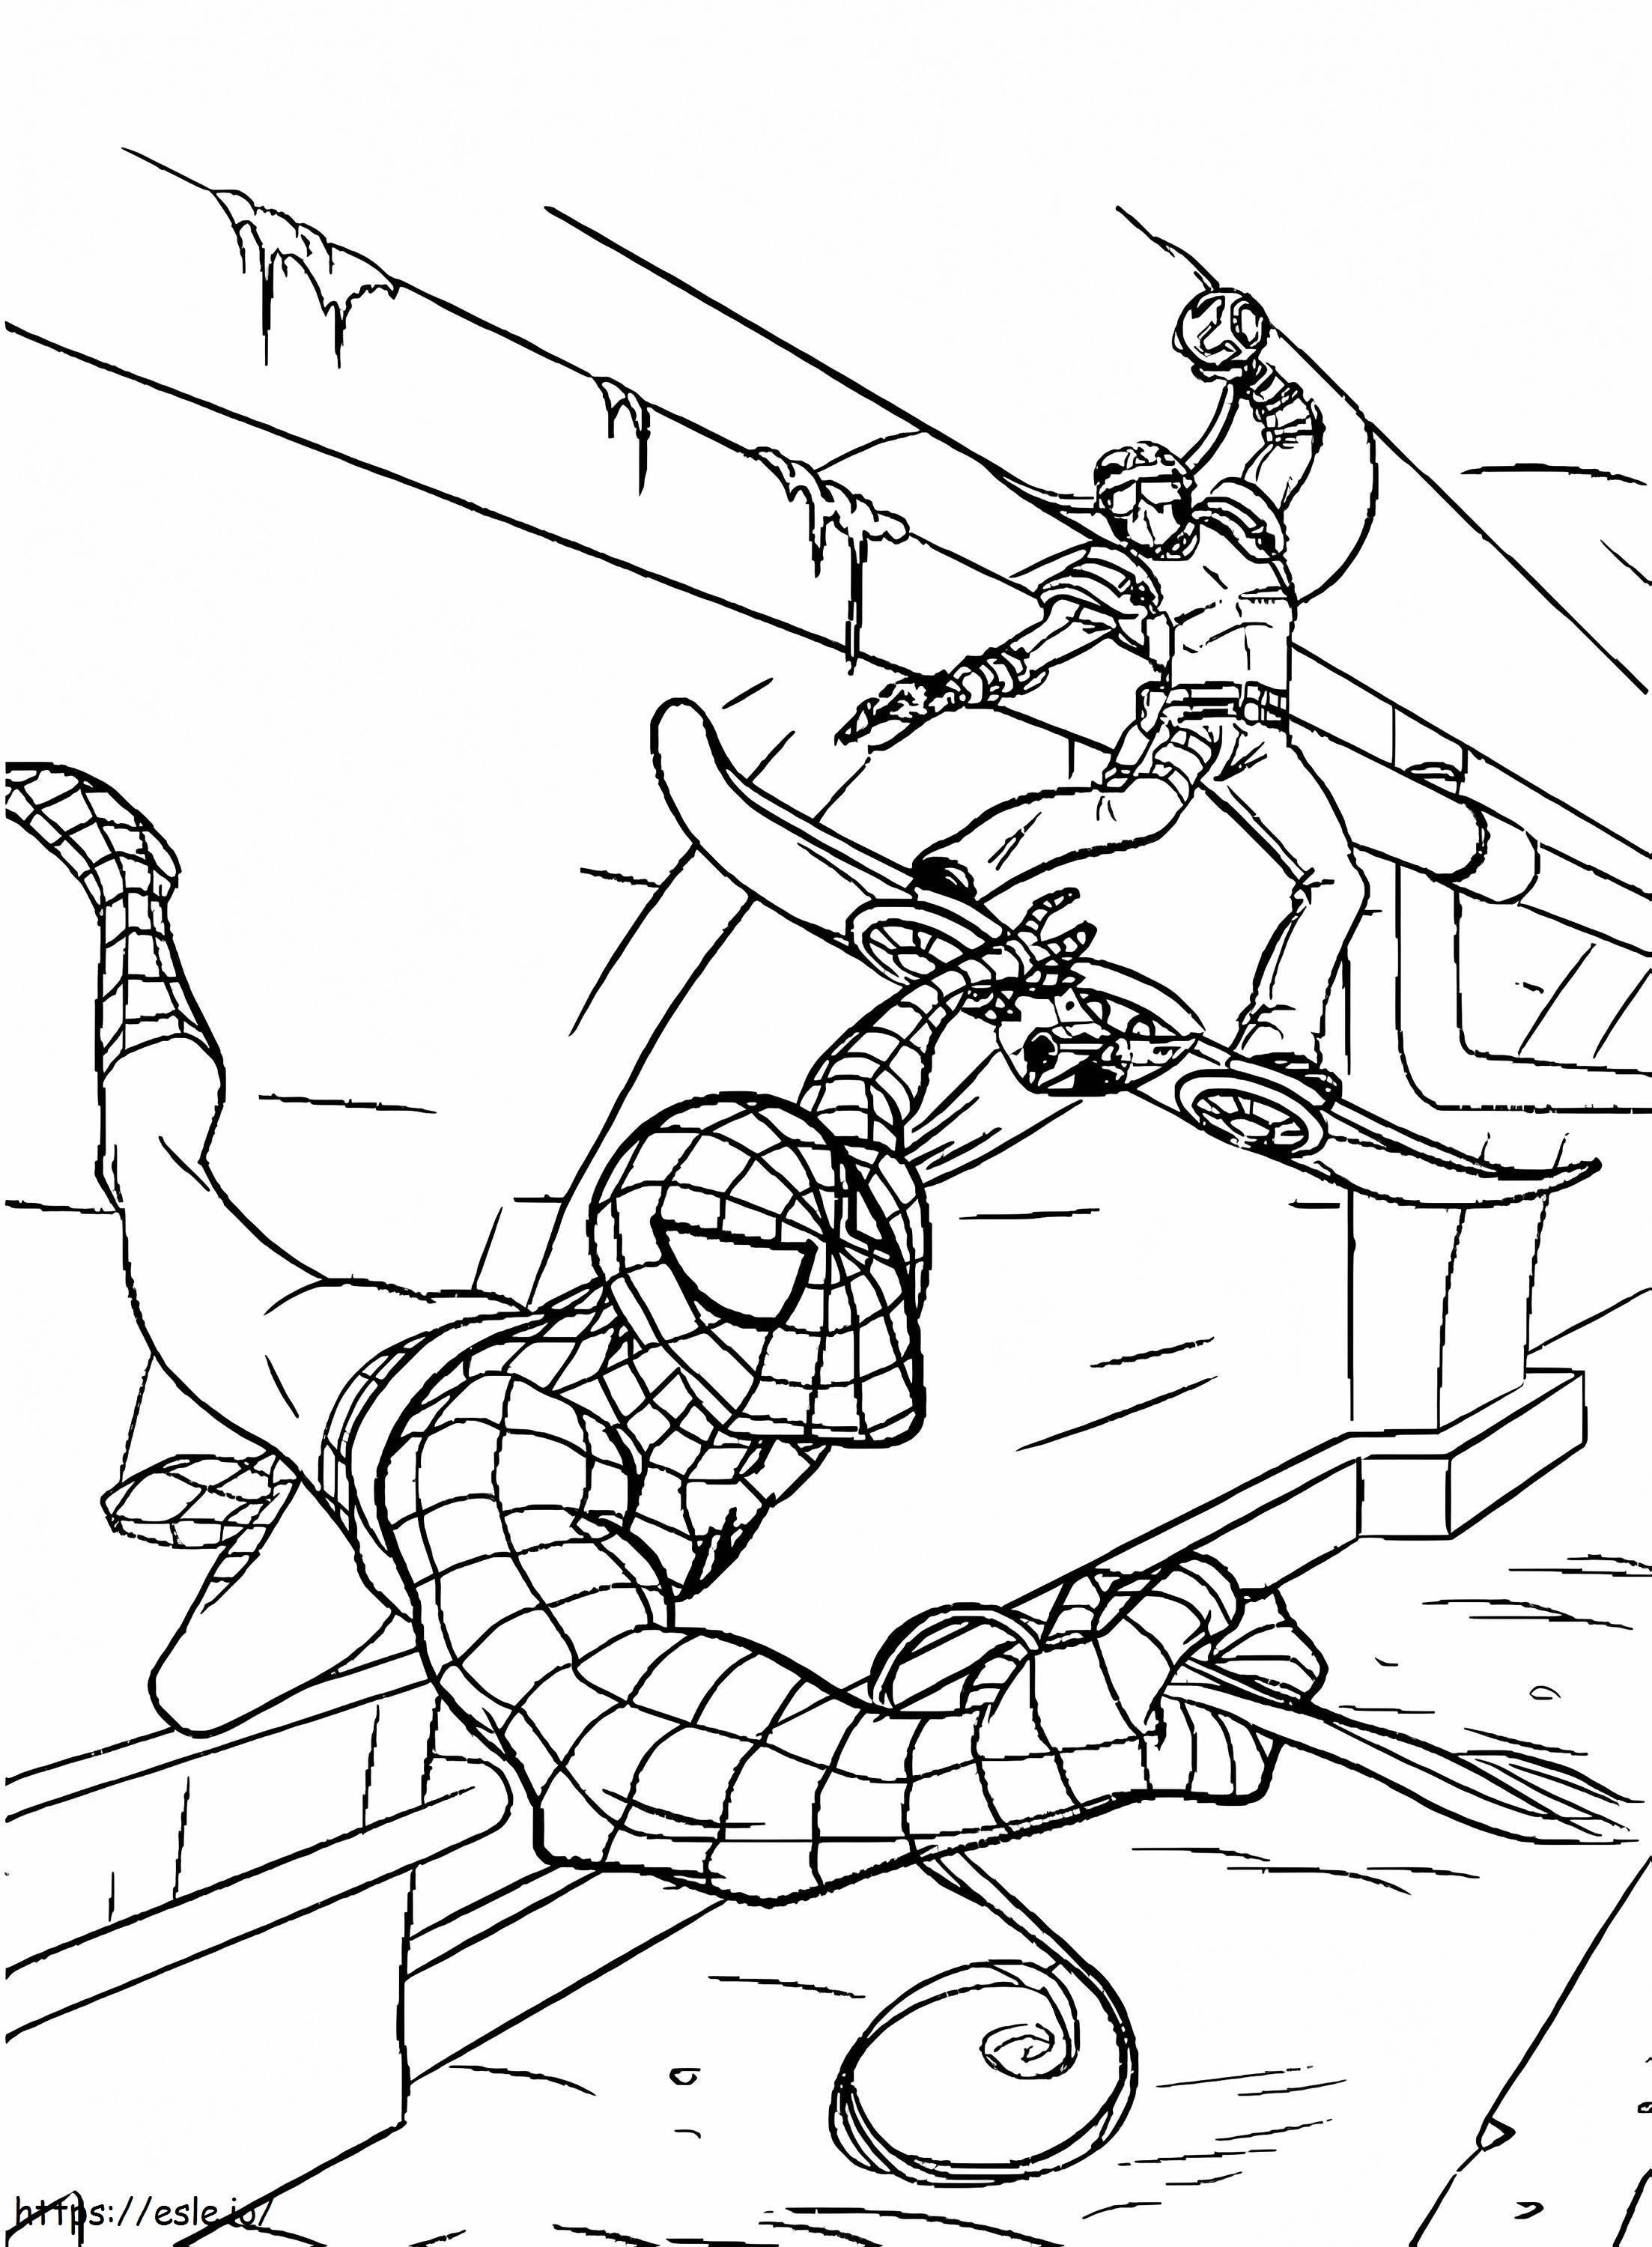 Spiderman Vs Harry Osborn coloring page